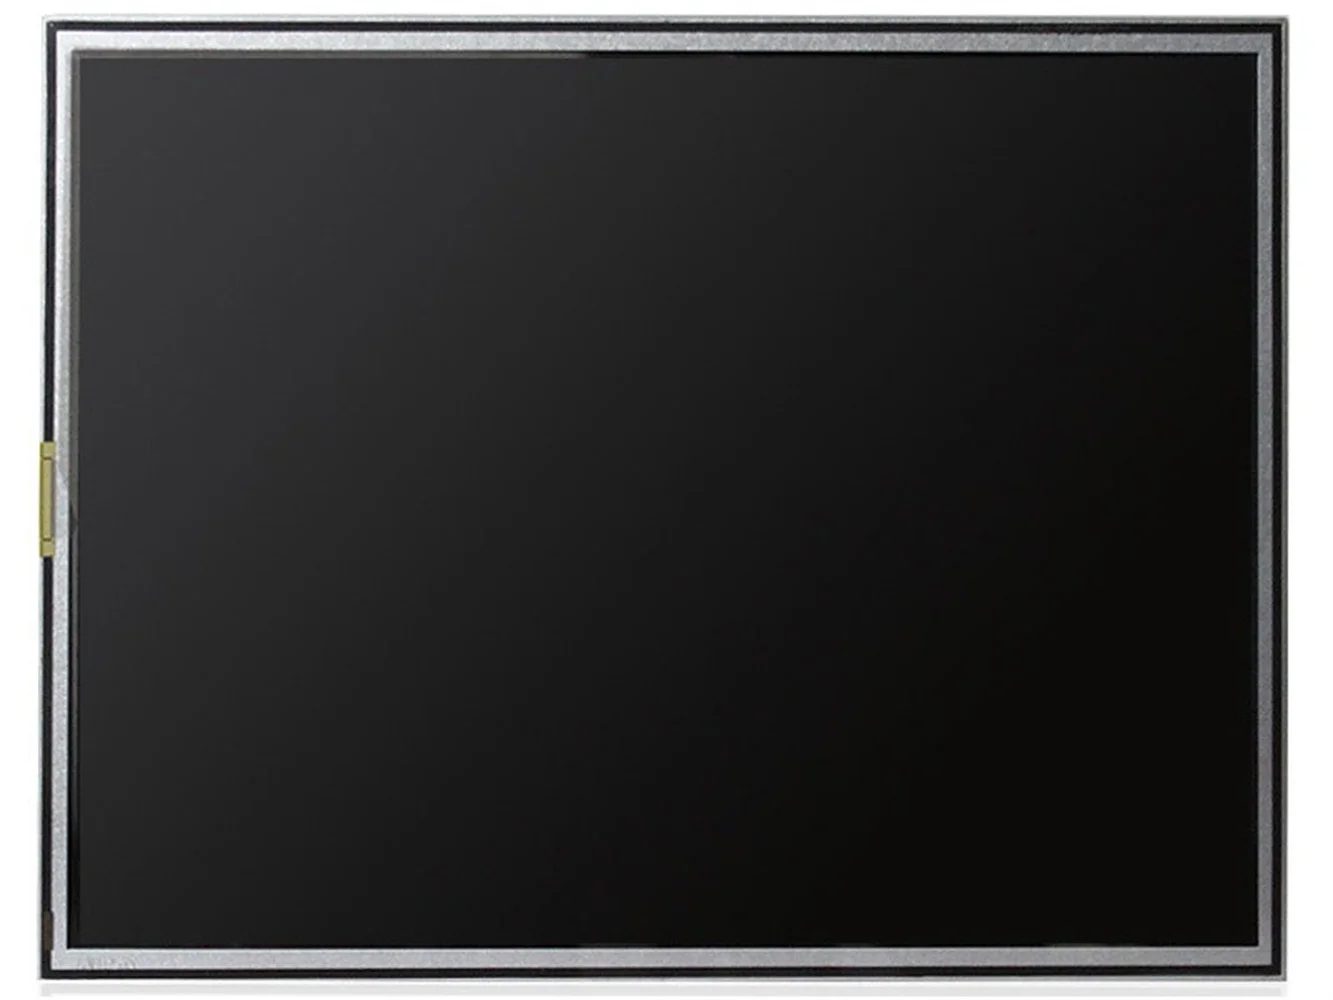 

100% tested and Original 15-inch Industrial LCD Screen G150XG01 V.1 /G150XG01 V.0